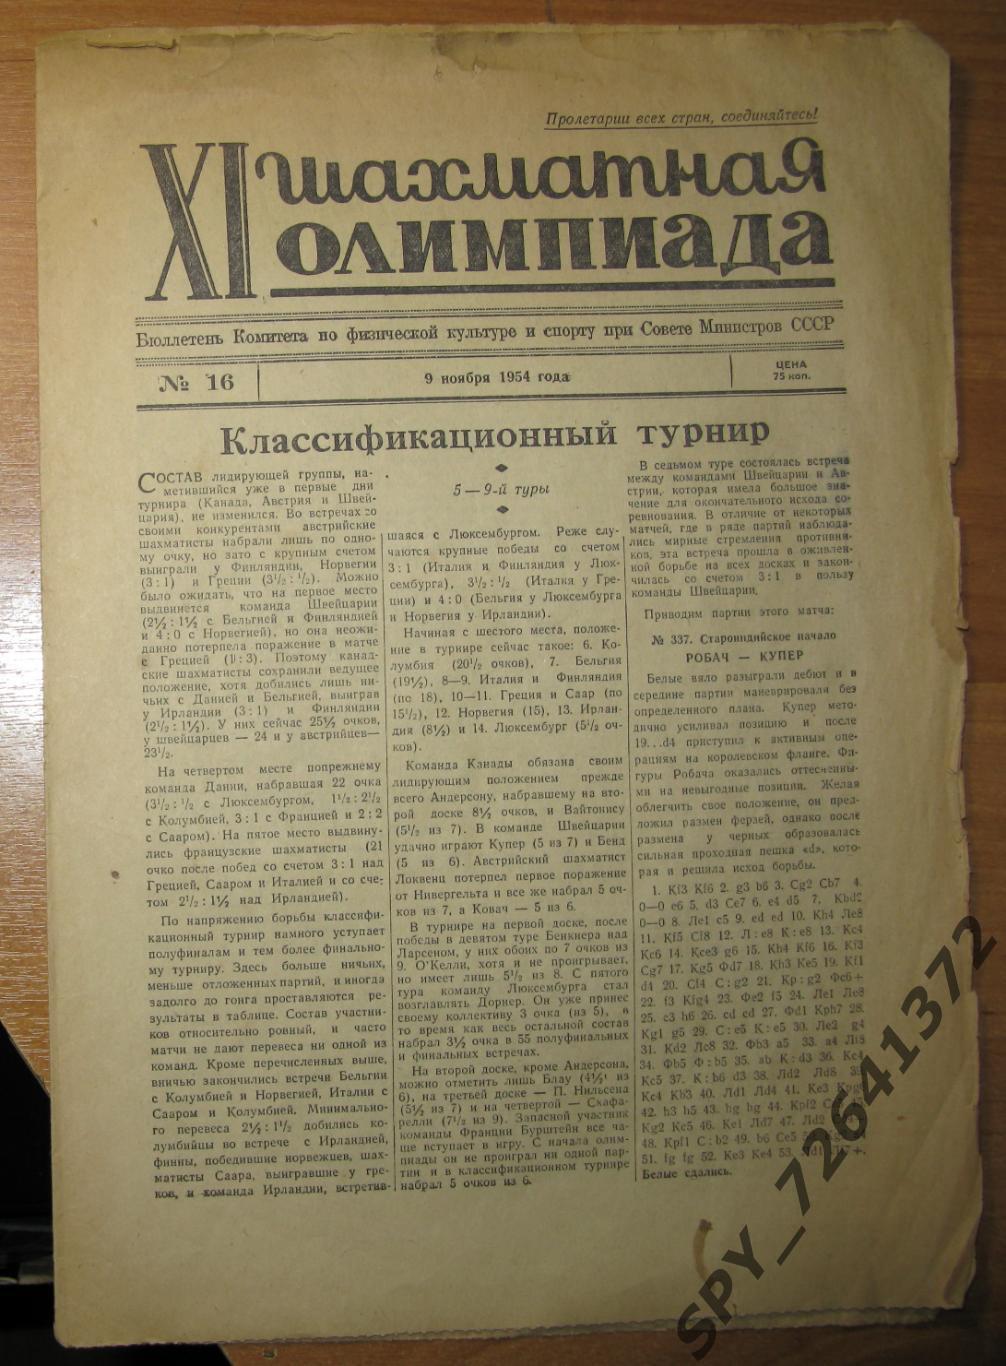 Бюллетень комитета по физкультуре и спорту 21 шахматная олимпиада.1954 г. N16